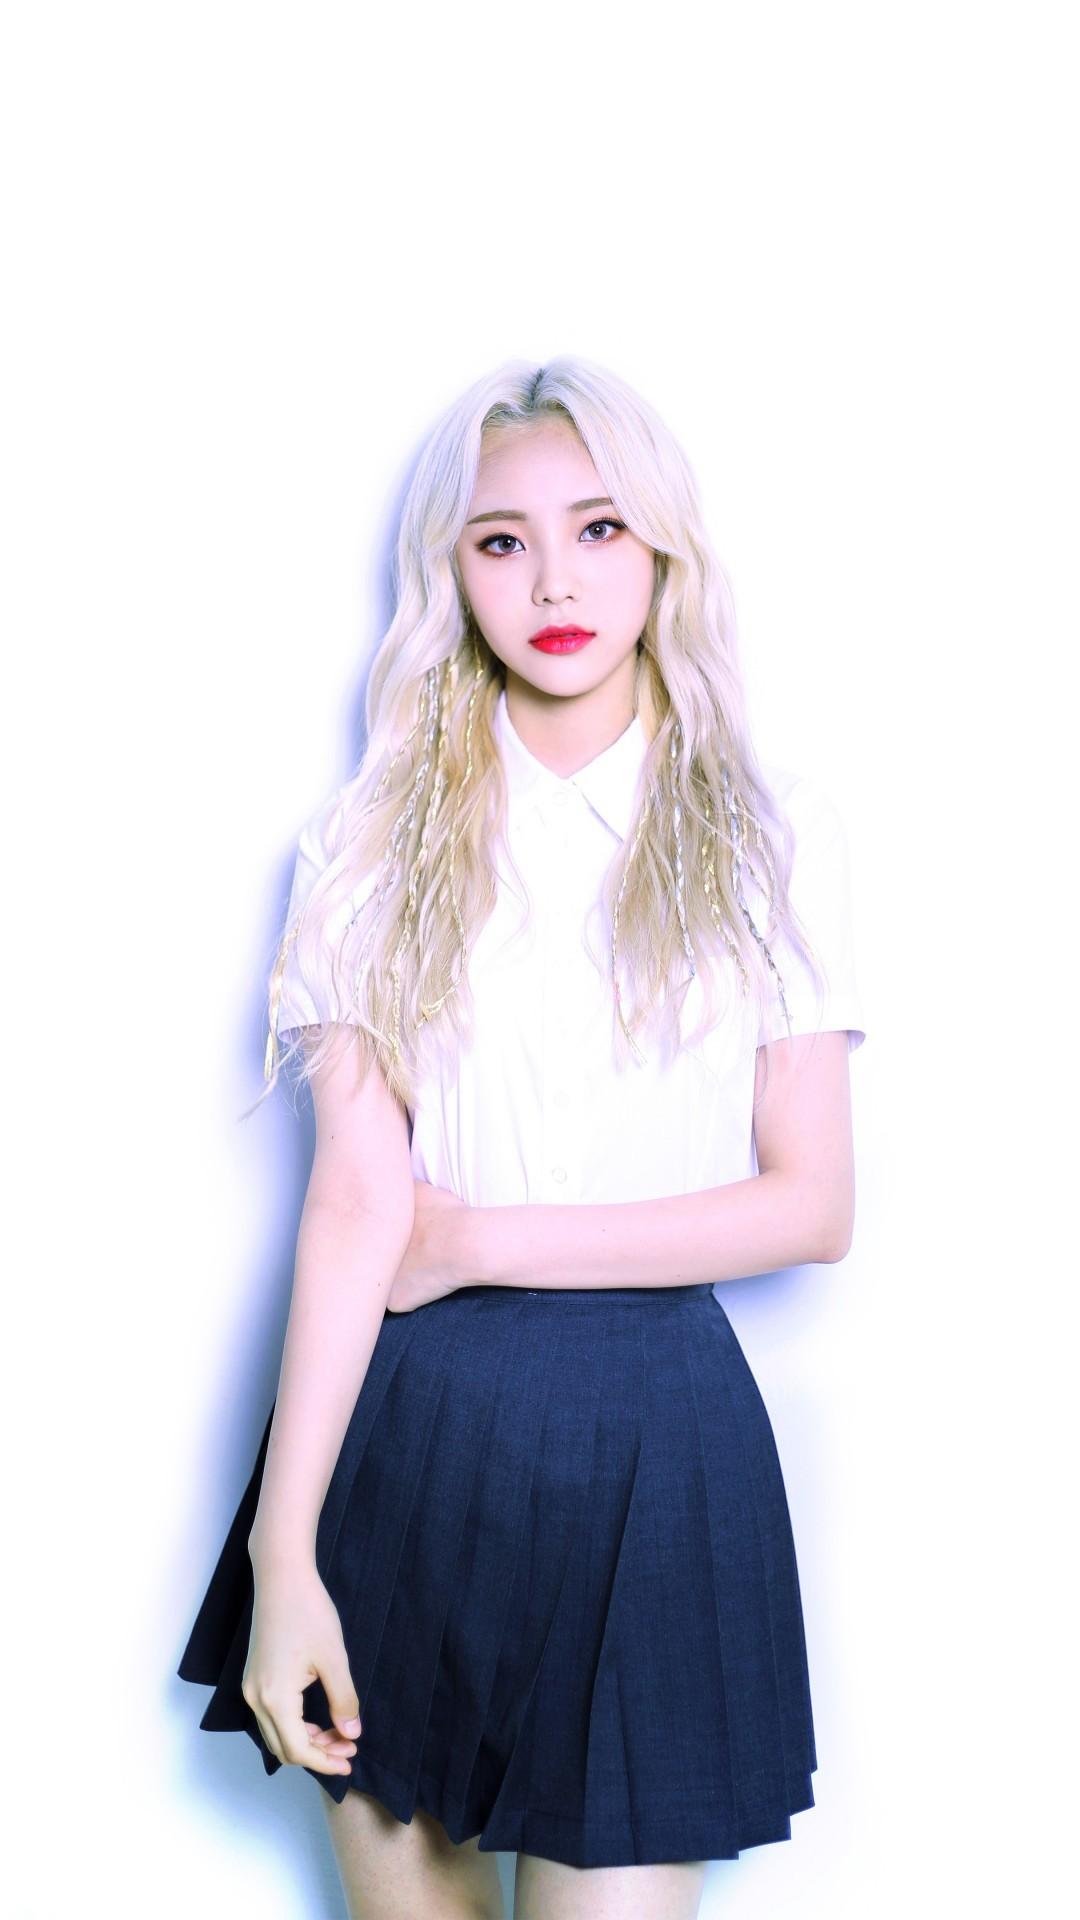 Download 1080x1920 Loona, Jinsoul, Blonde, South Korean Girl